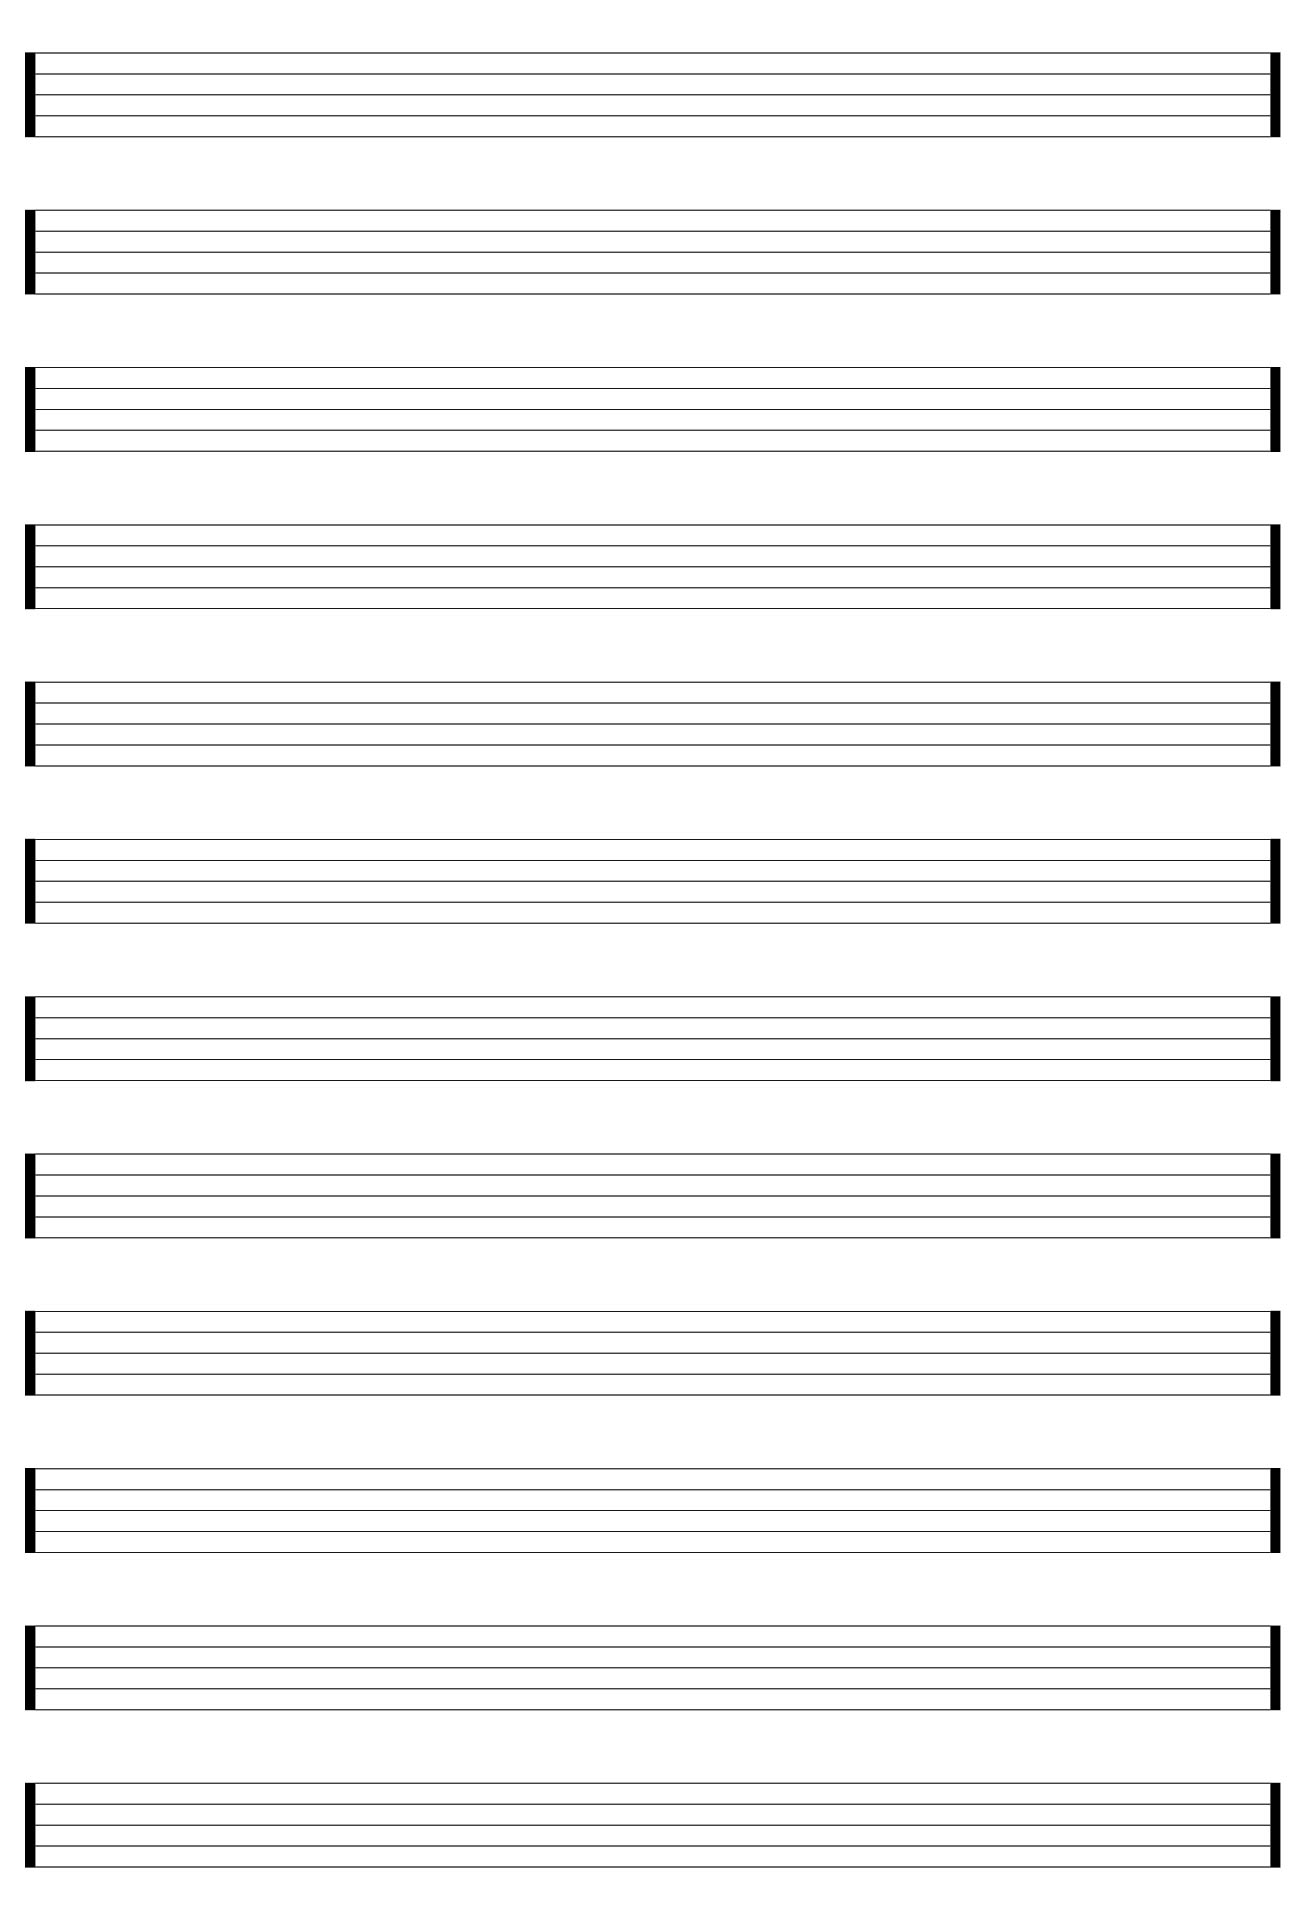 guitar-blank-sheet-music-pdf-printable-staff-paper-6-pdf-documents